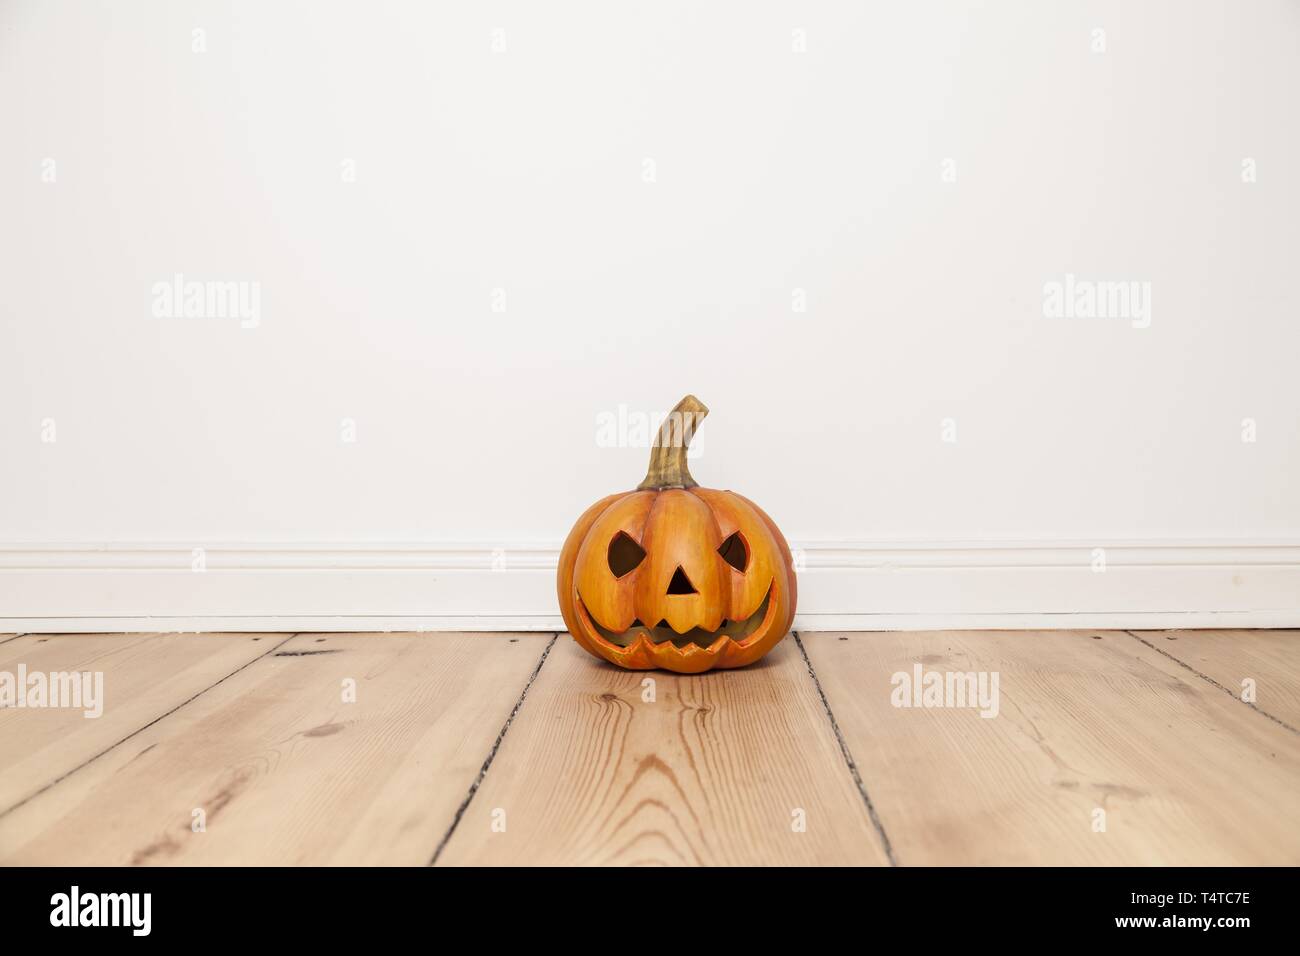 Grinning clay pumpkin on wooden floor, Halloween Stock Photo